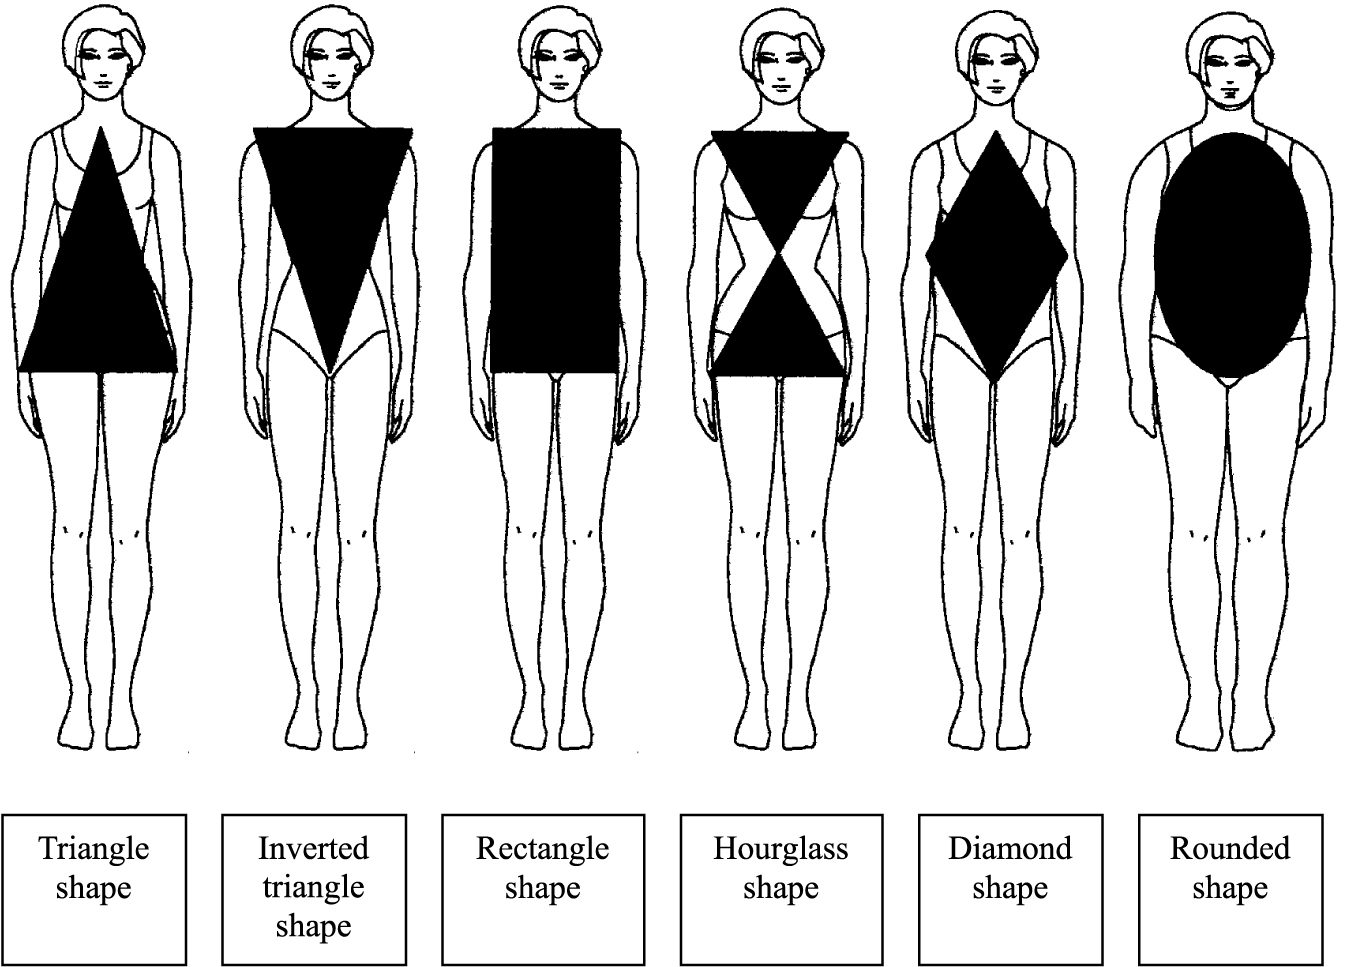 Women Body Shapes Types